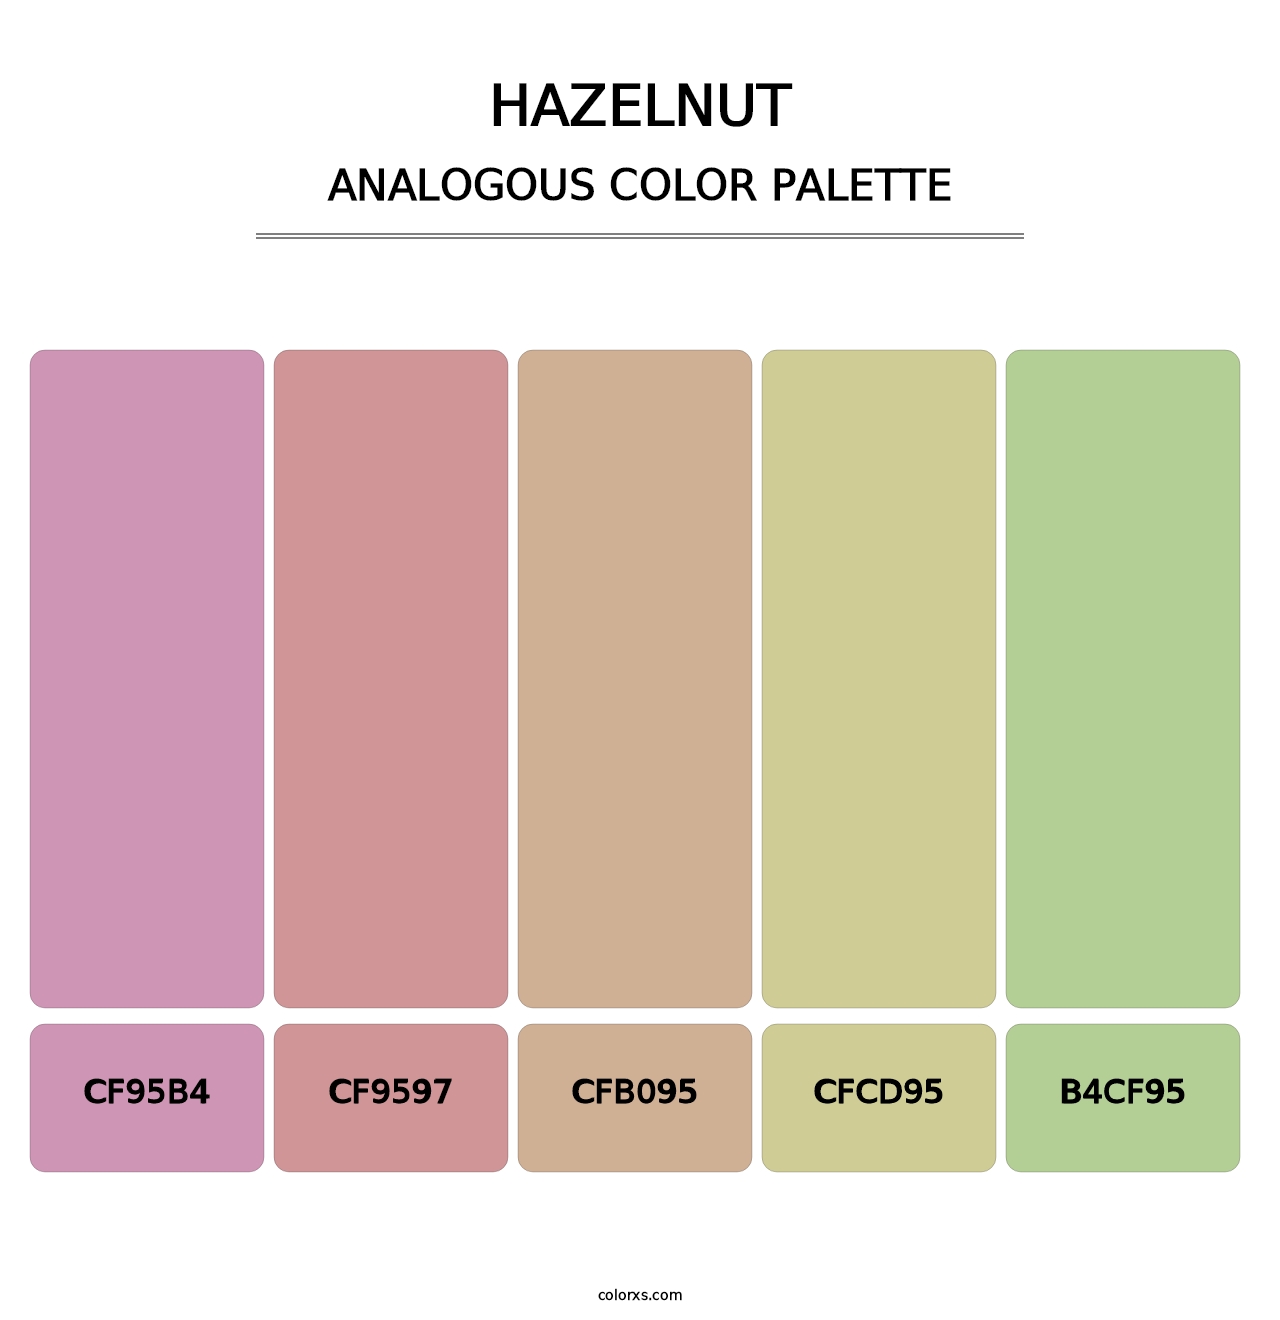 Hazelnut - Analogous Color Palette